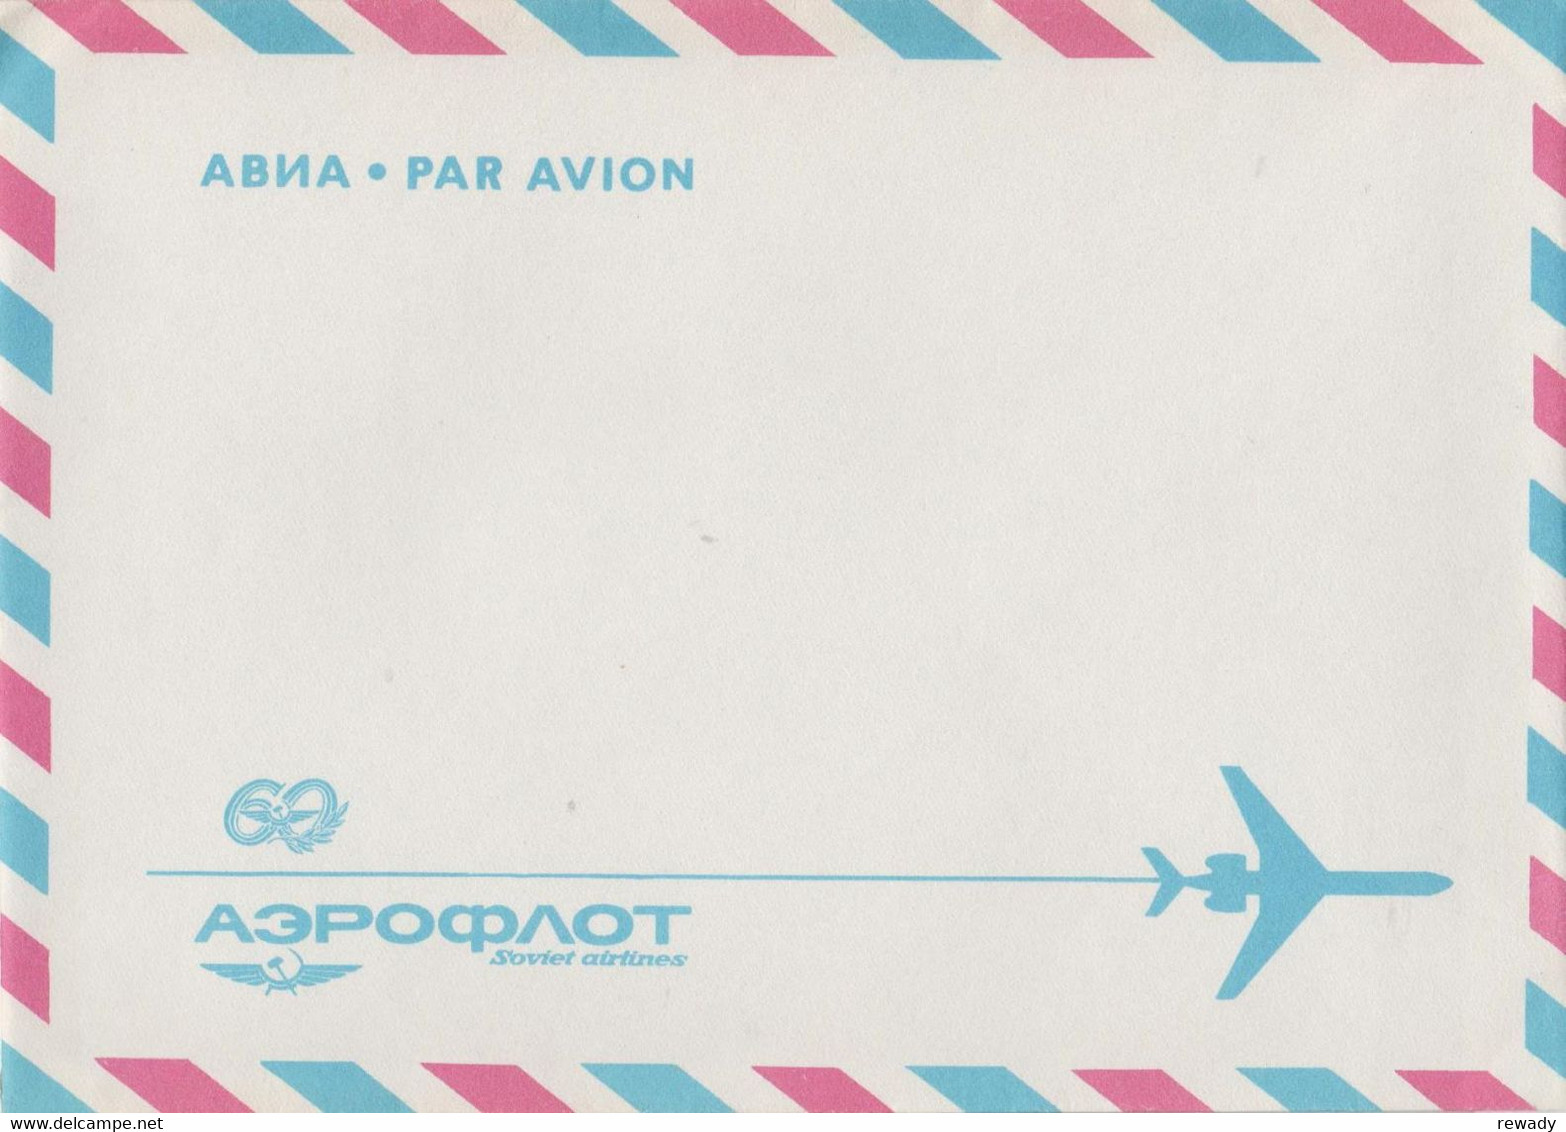 AEROFLOT / Soviet Airlines - Advertising lot / original cover / leaflet / envelope / sticker / postcards